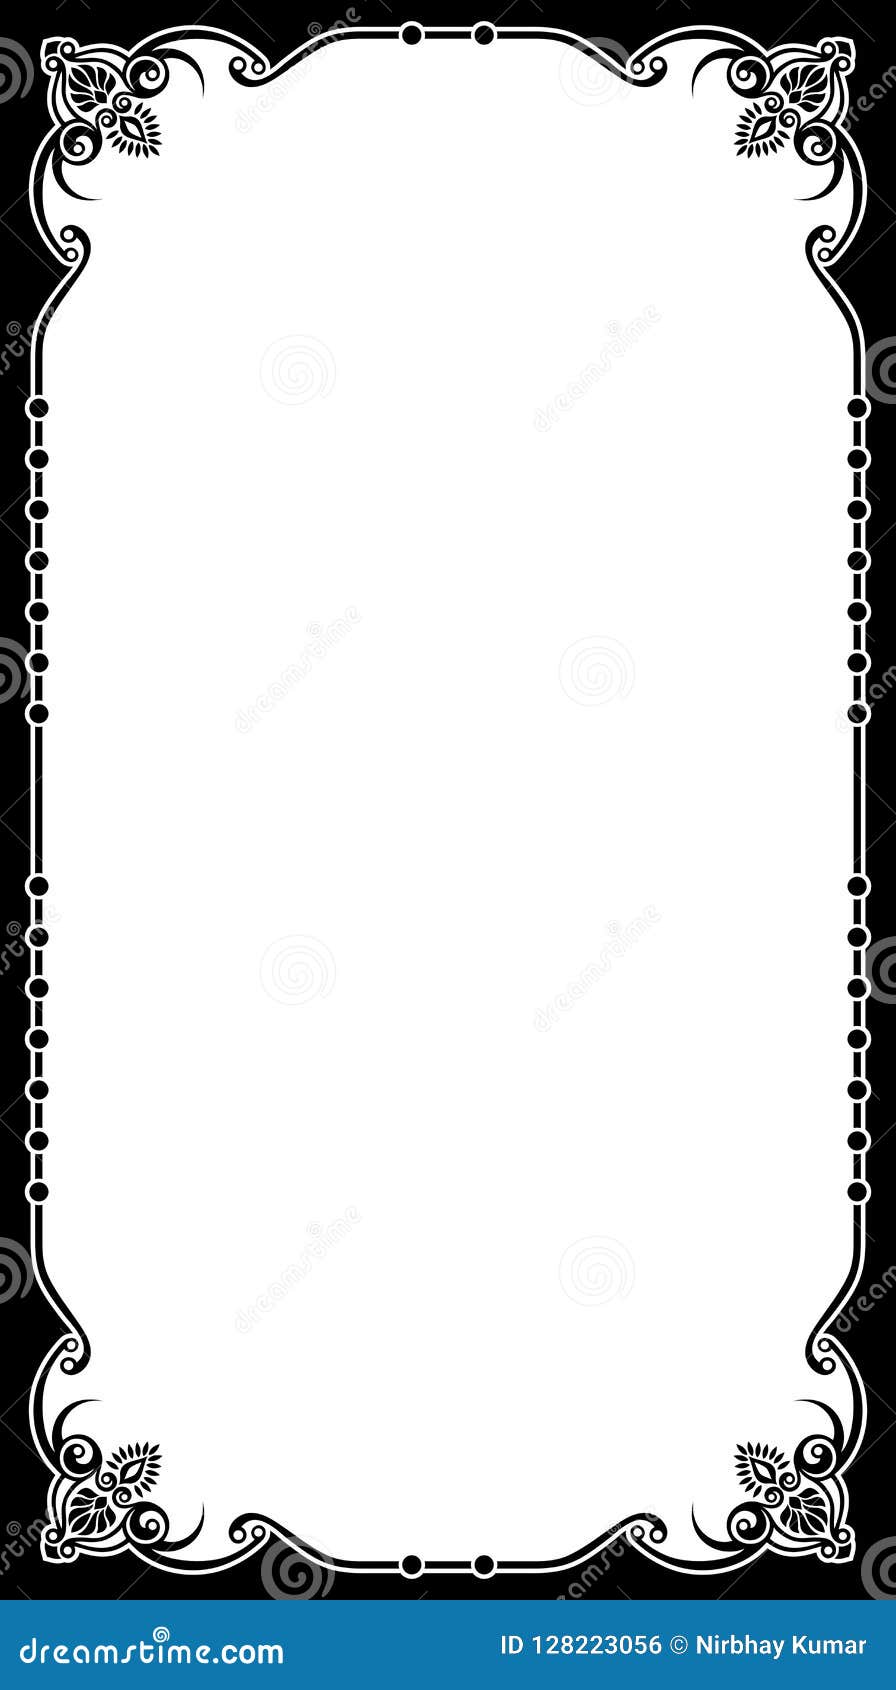 restaurant menu card frame template stock vector